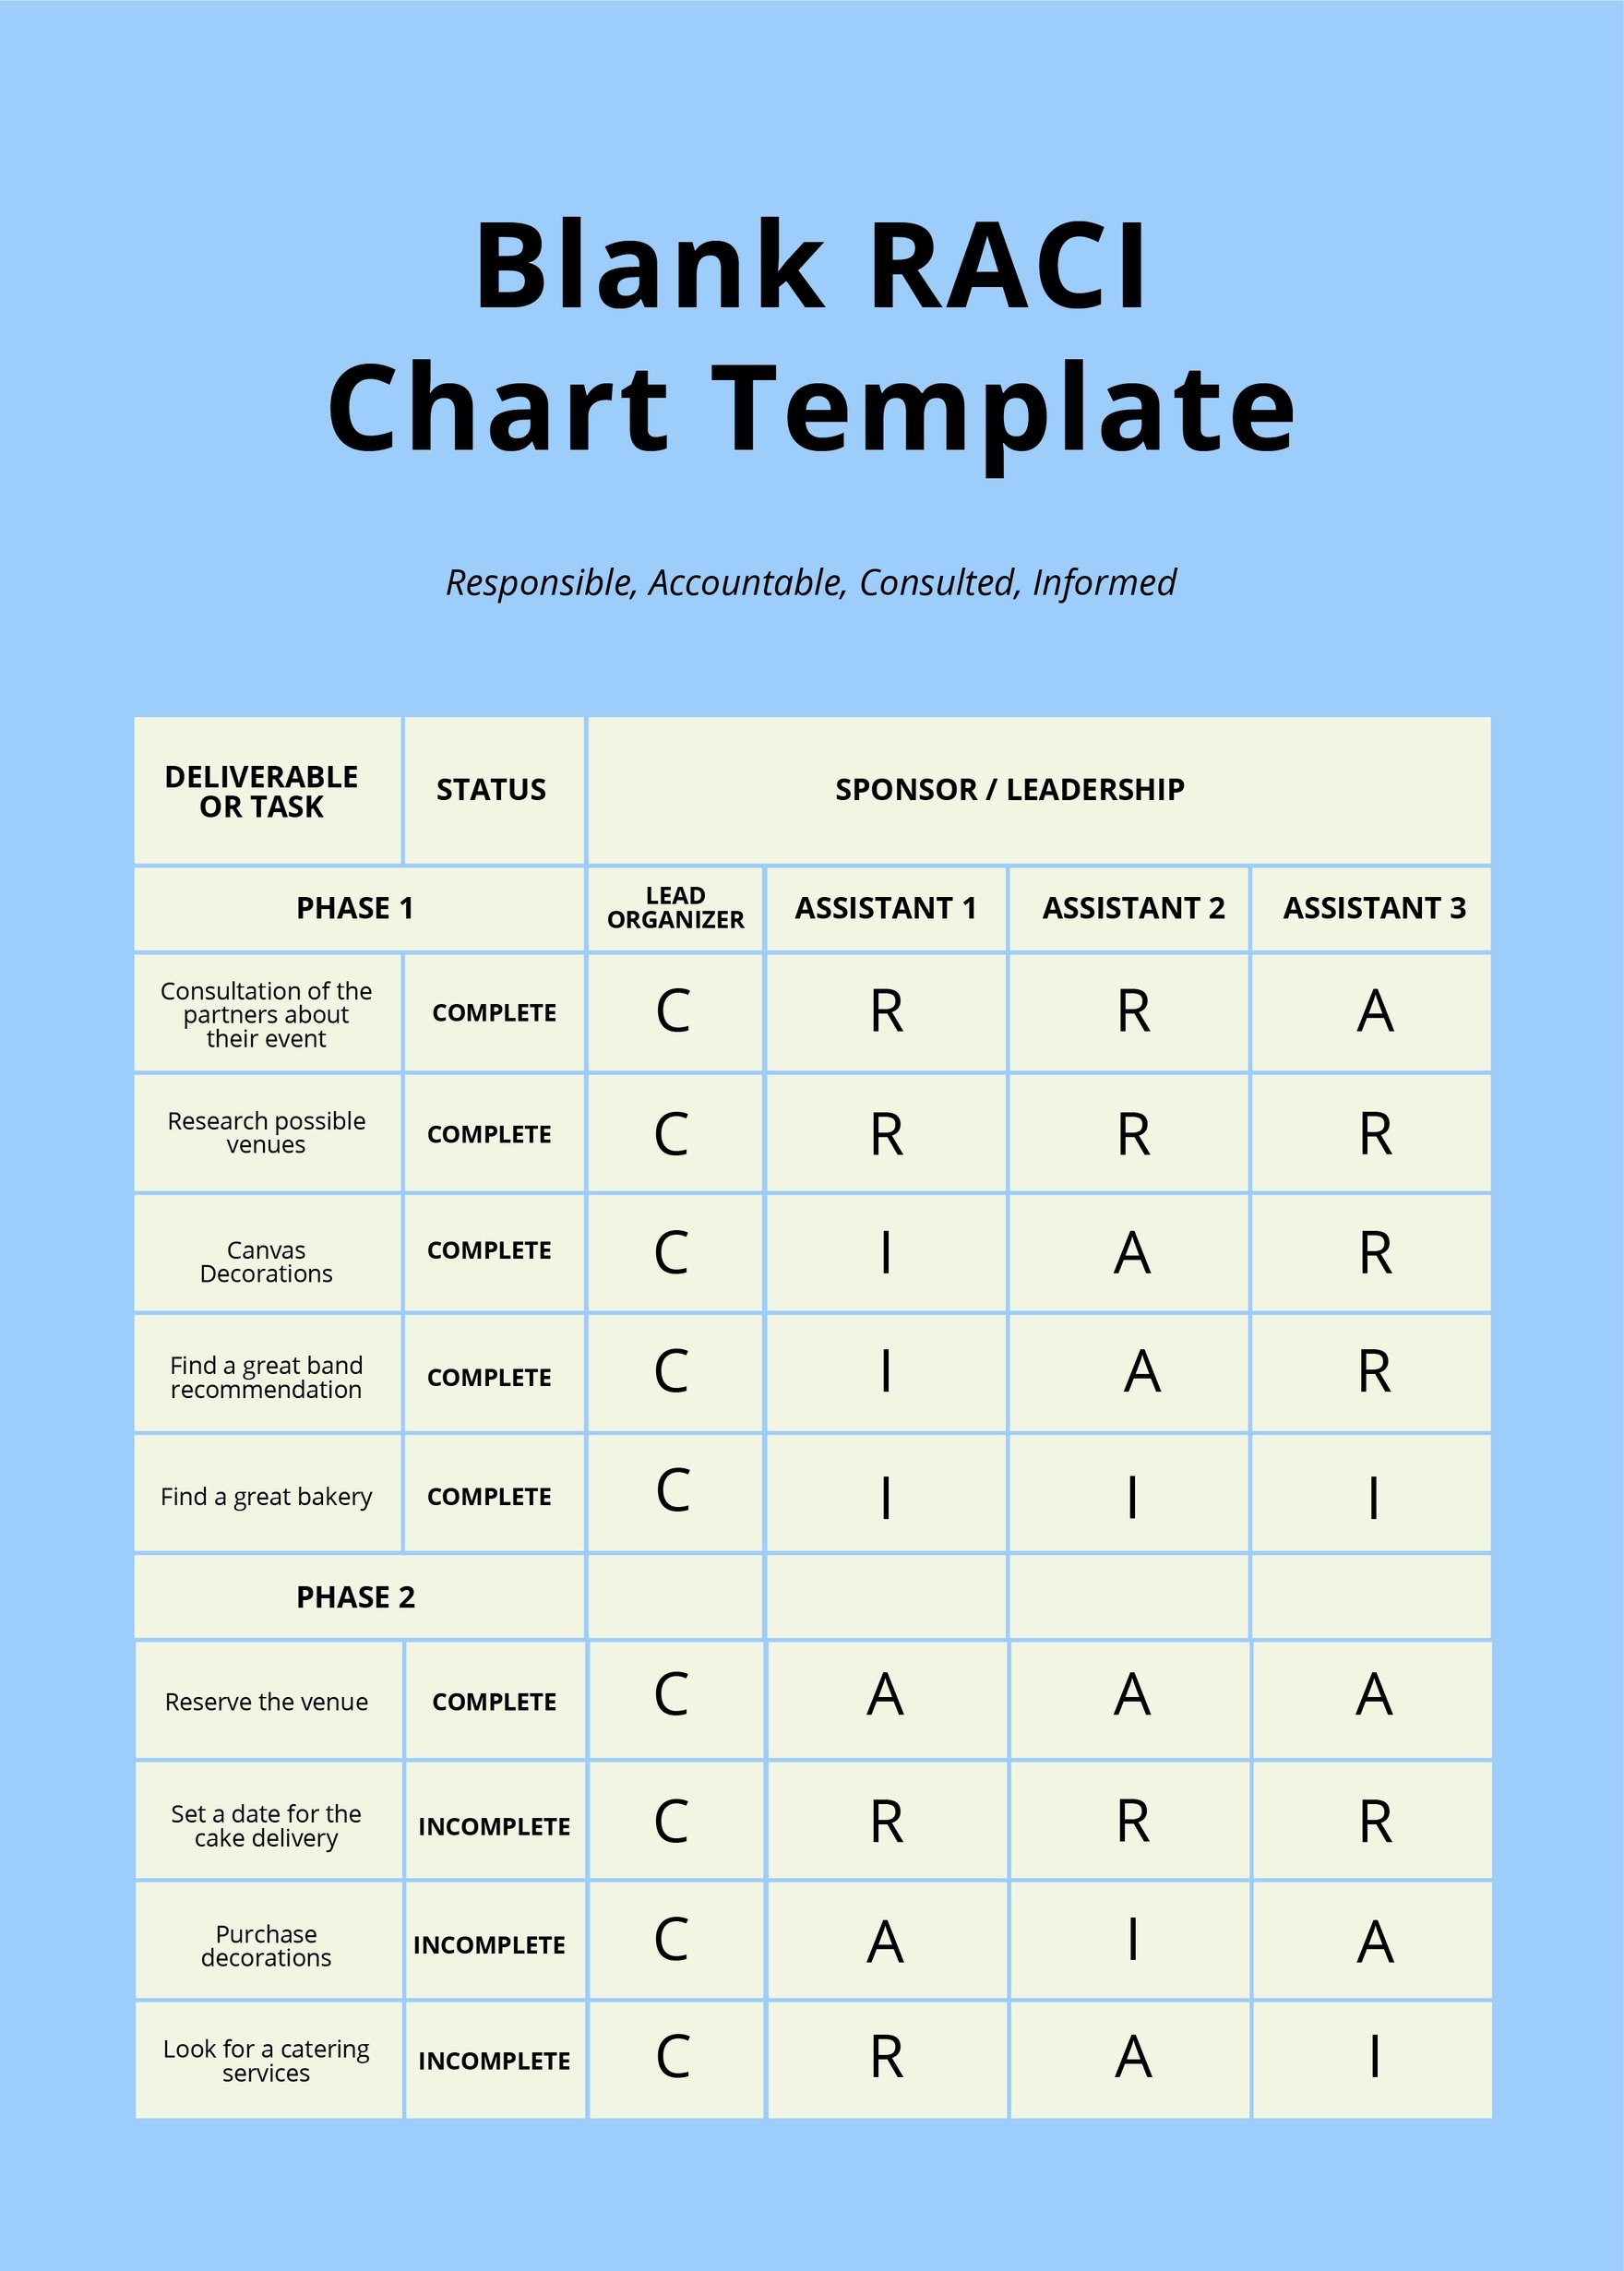 Blank RACI Chart Template